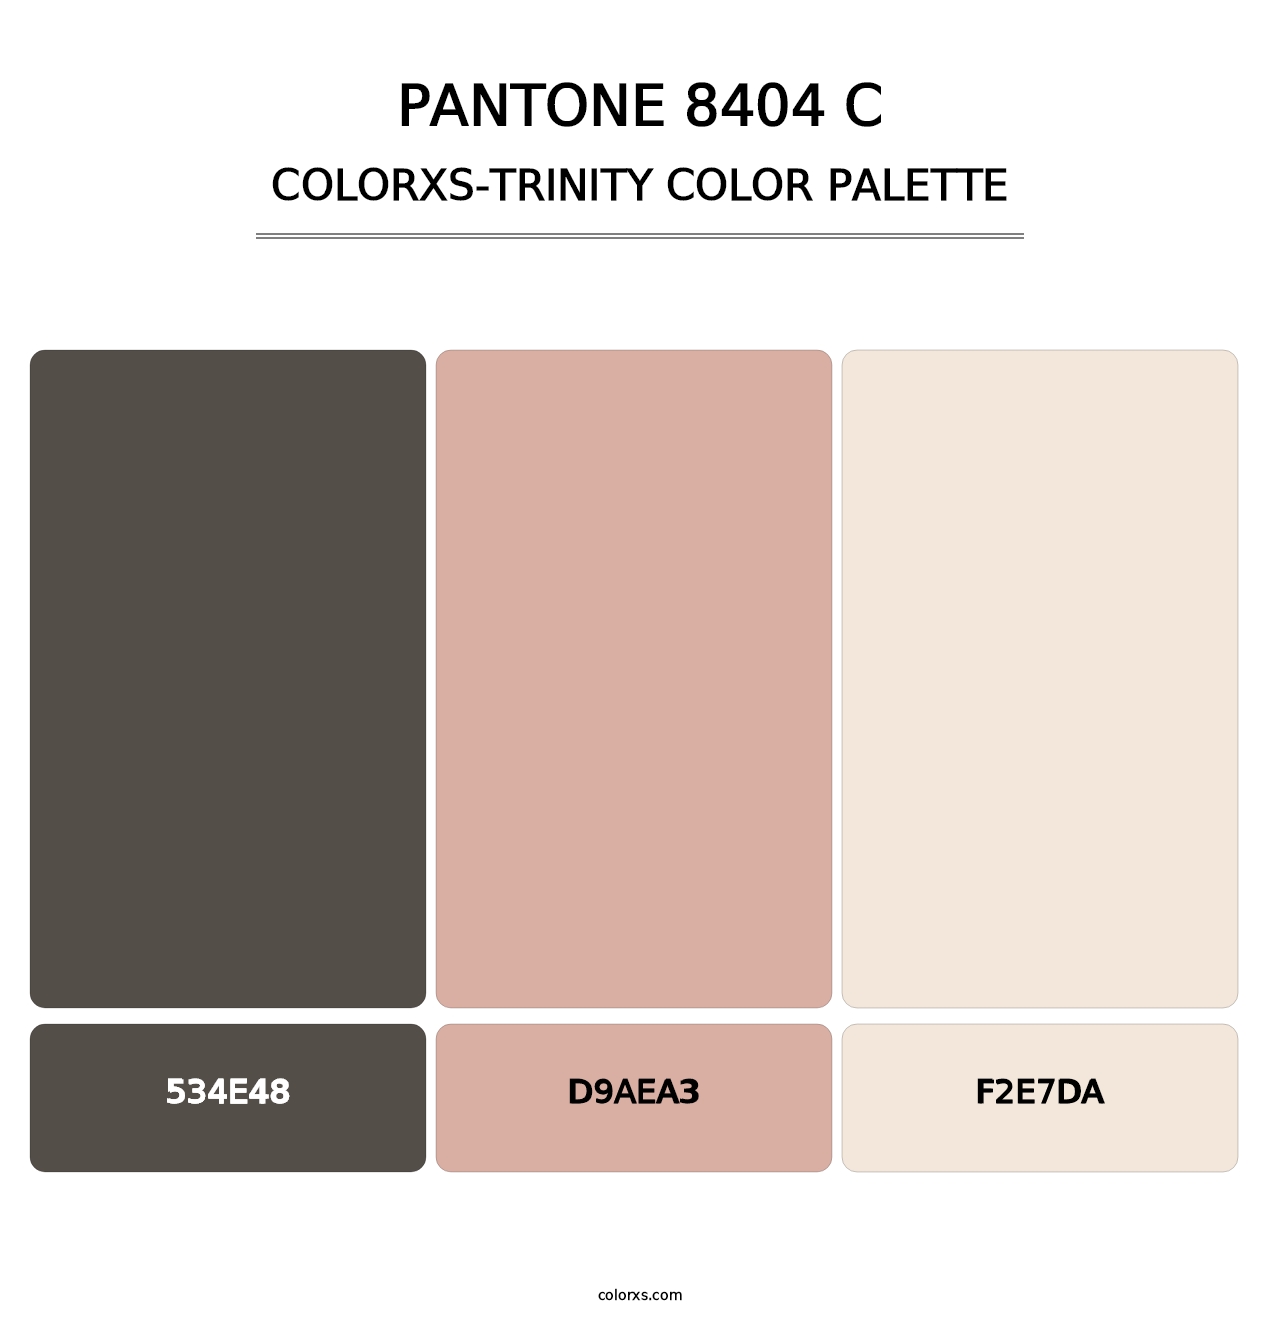 PANTONE 8404 C - Colorxs Trinity Palette